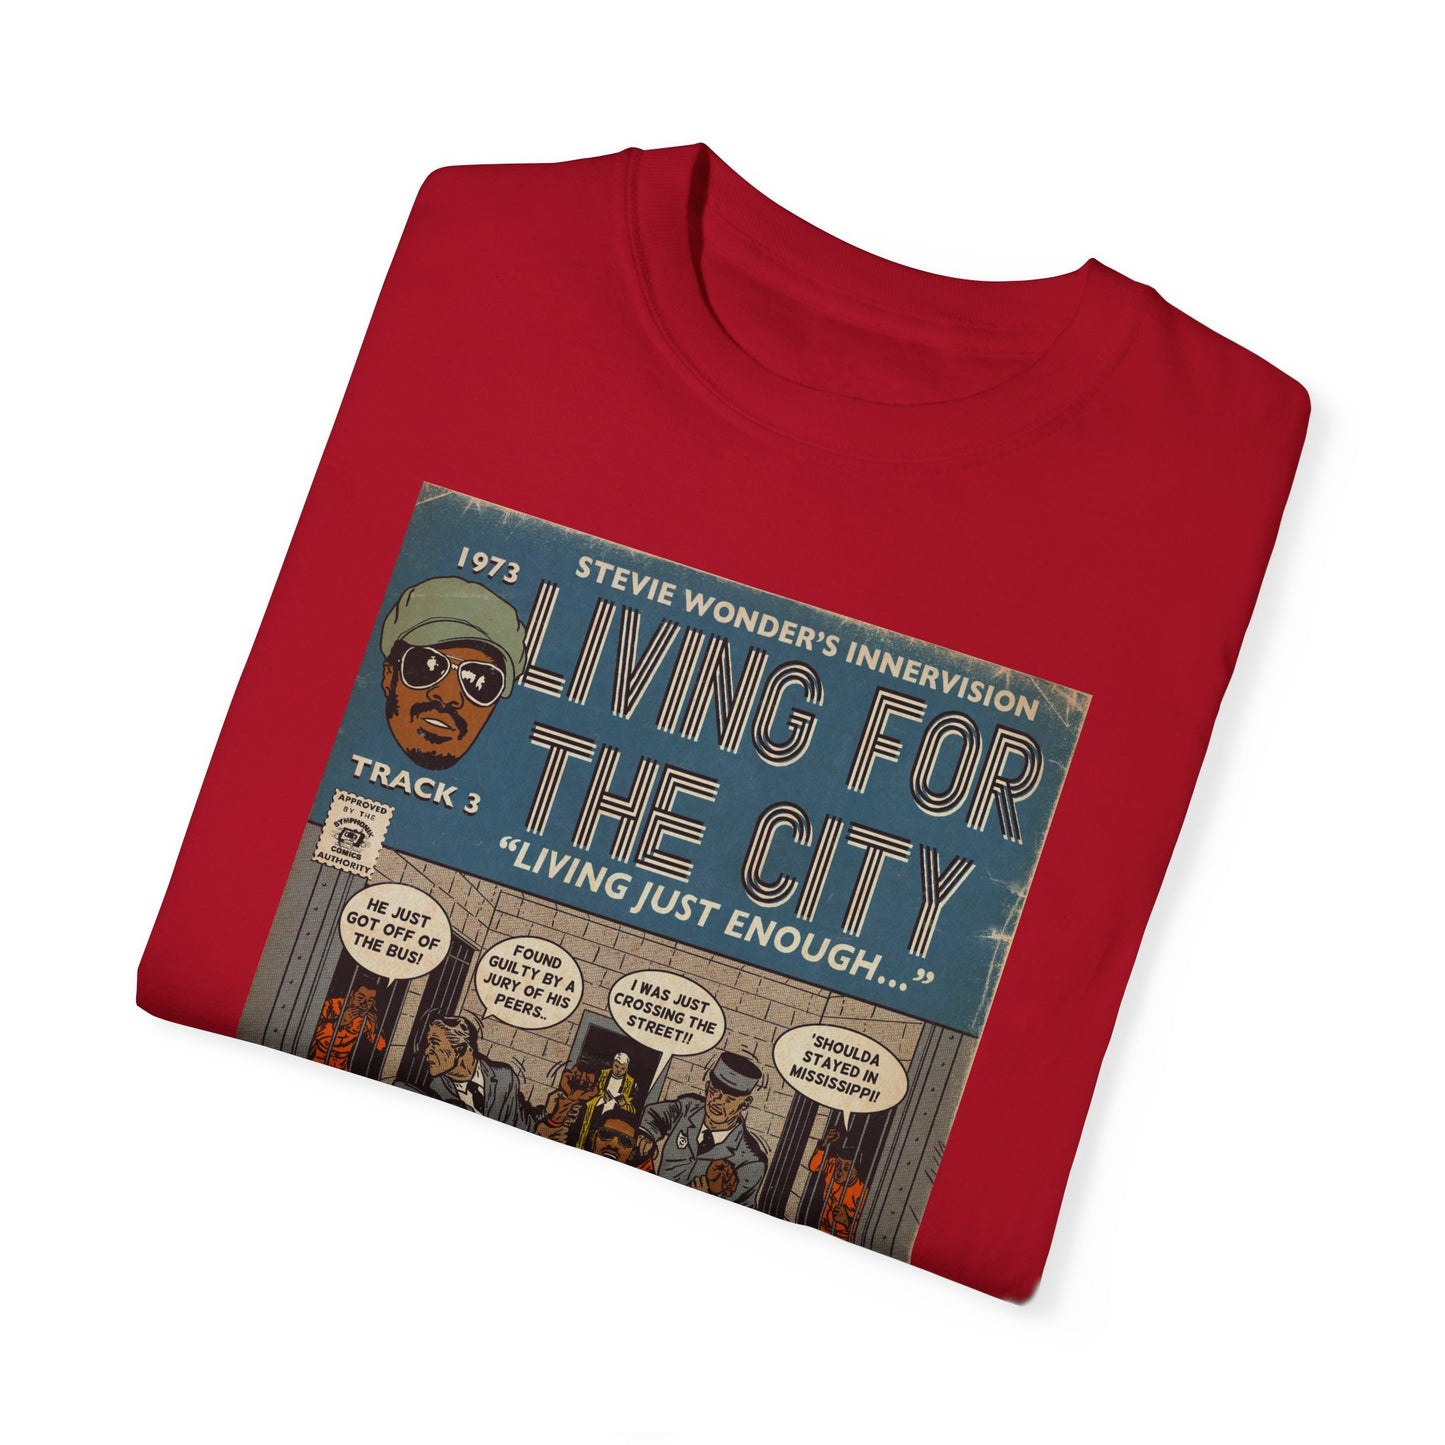 Stevie Wonder - Living For The City - Unisex Comfort Colors T-shirt